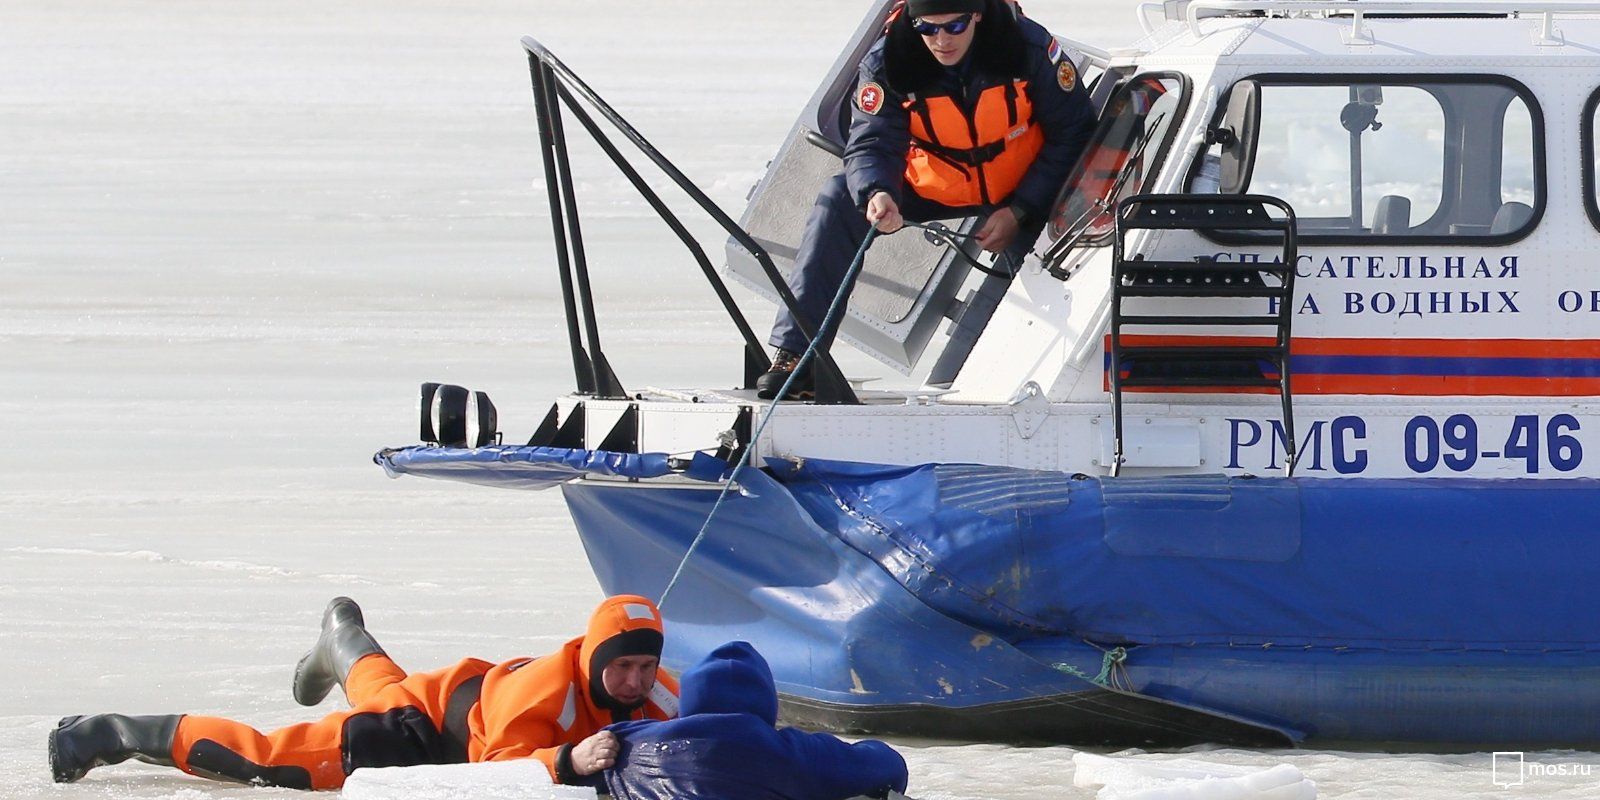 Московские спасатели на воде подвели итоги 2018 года